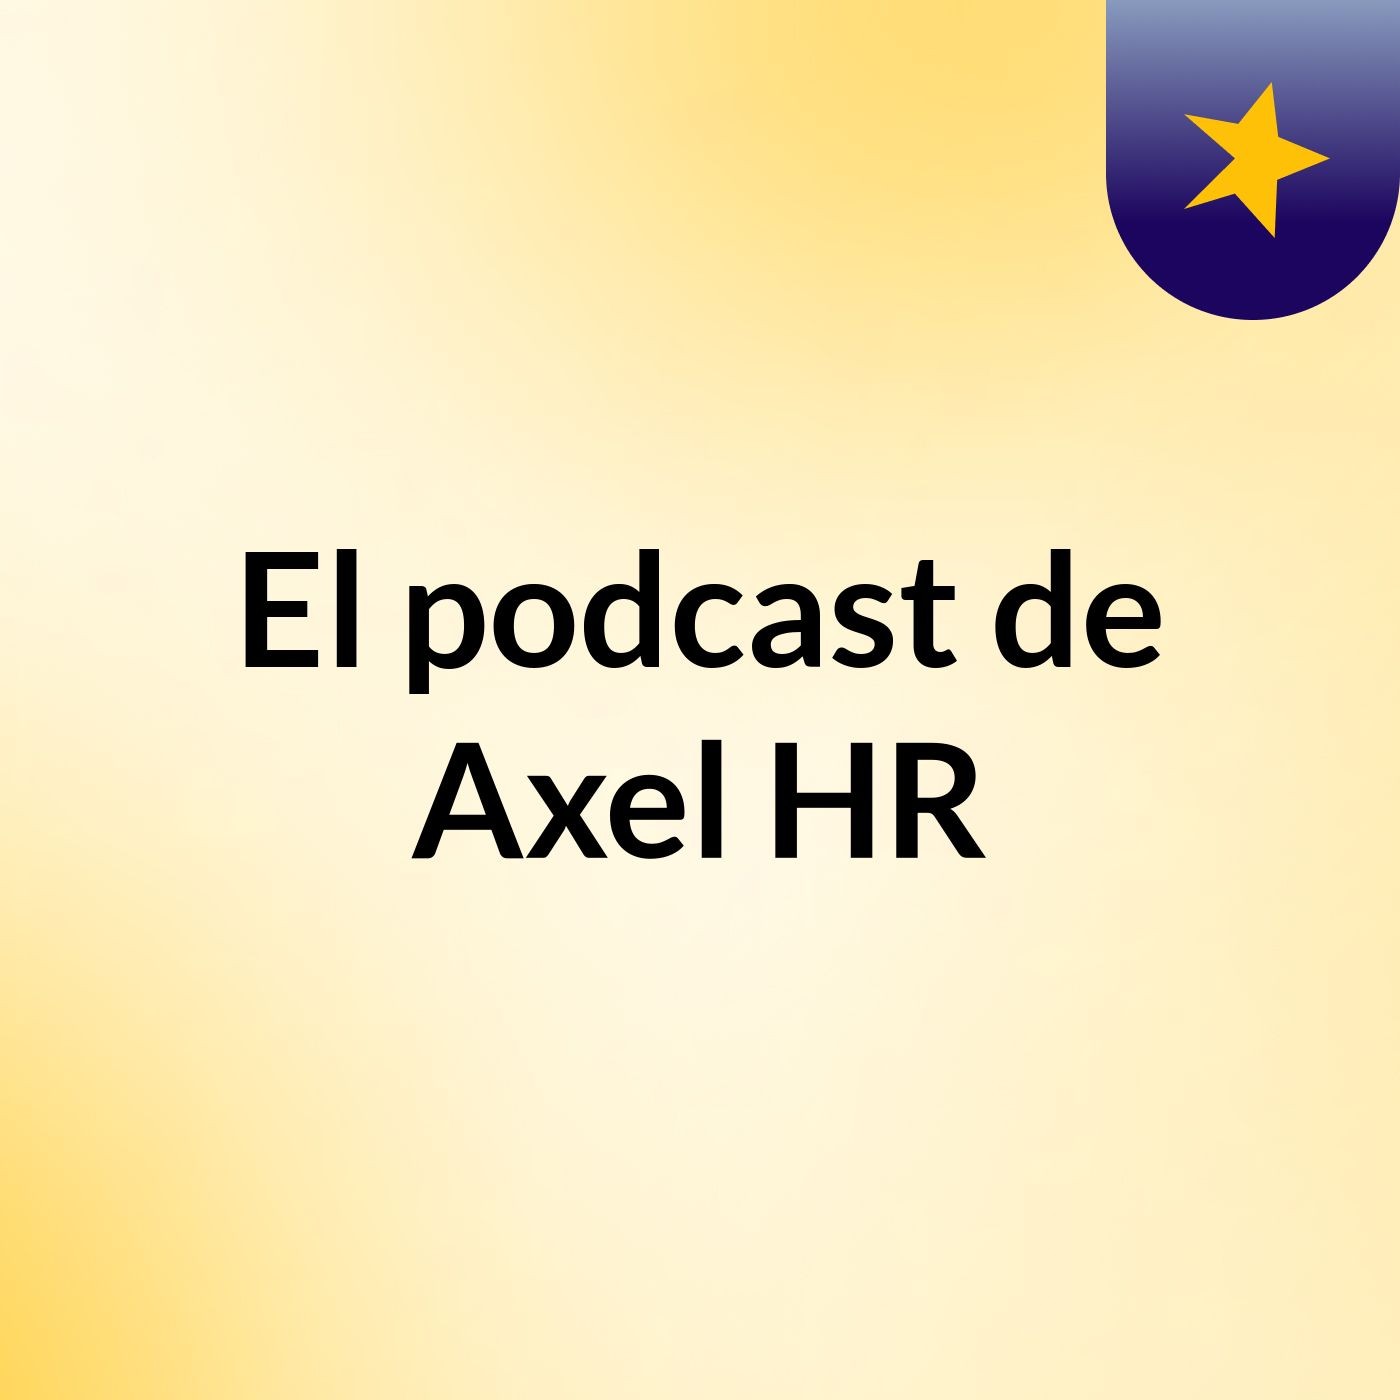 El podcast de Axel HR